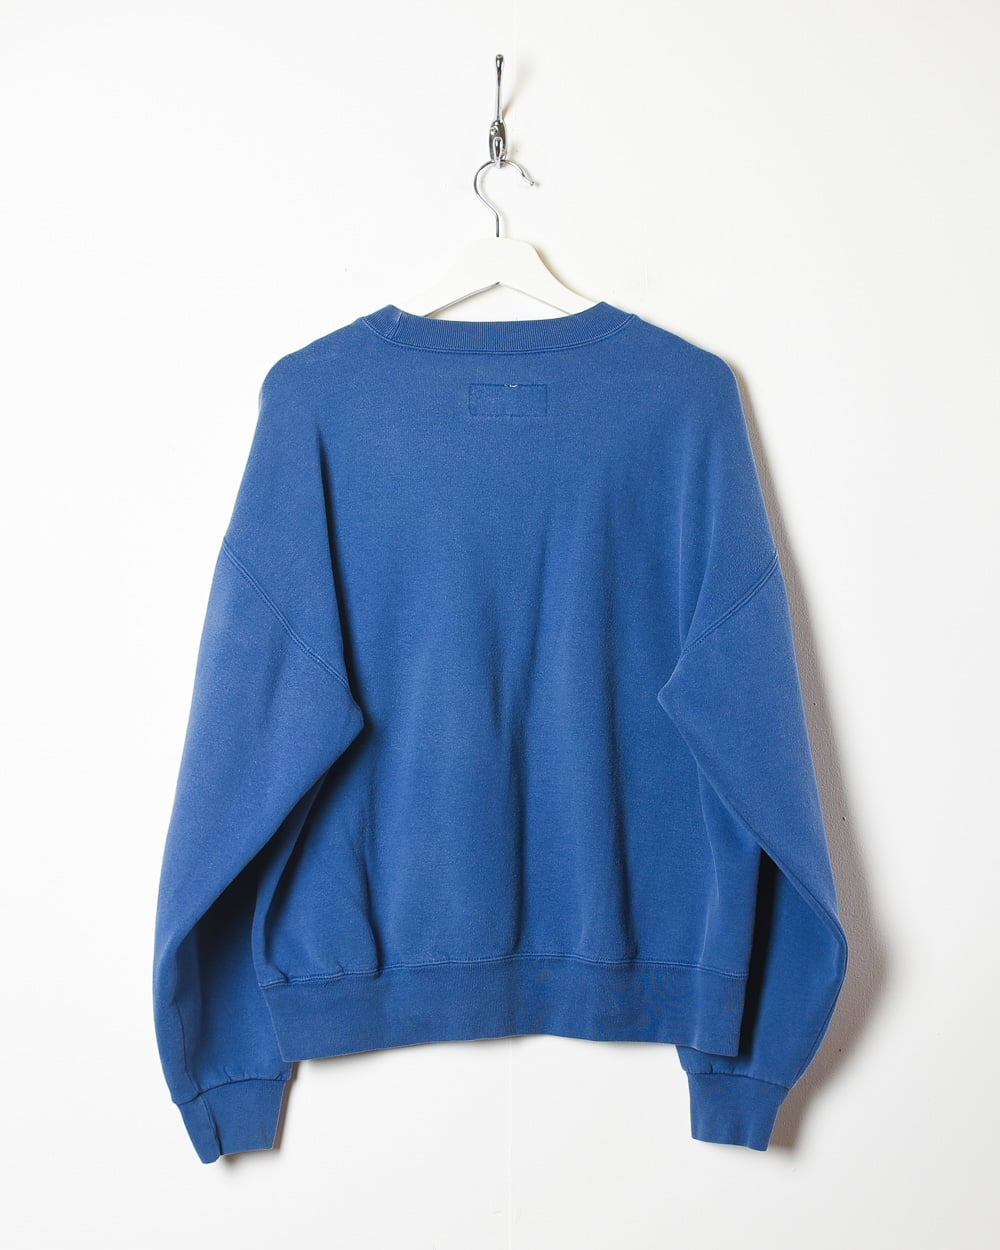 Vintage 90s Black Russell Athletic Sweatshirt - Small Cotton – Domno Vintage